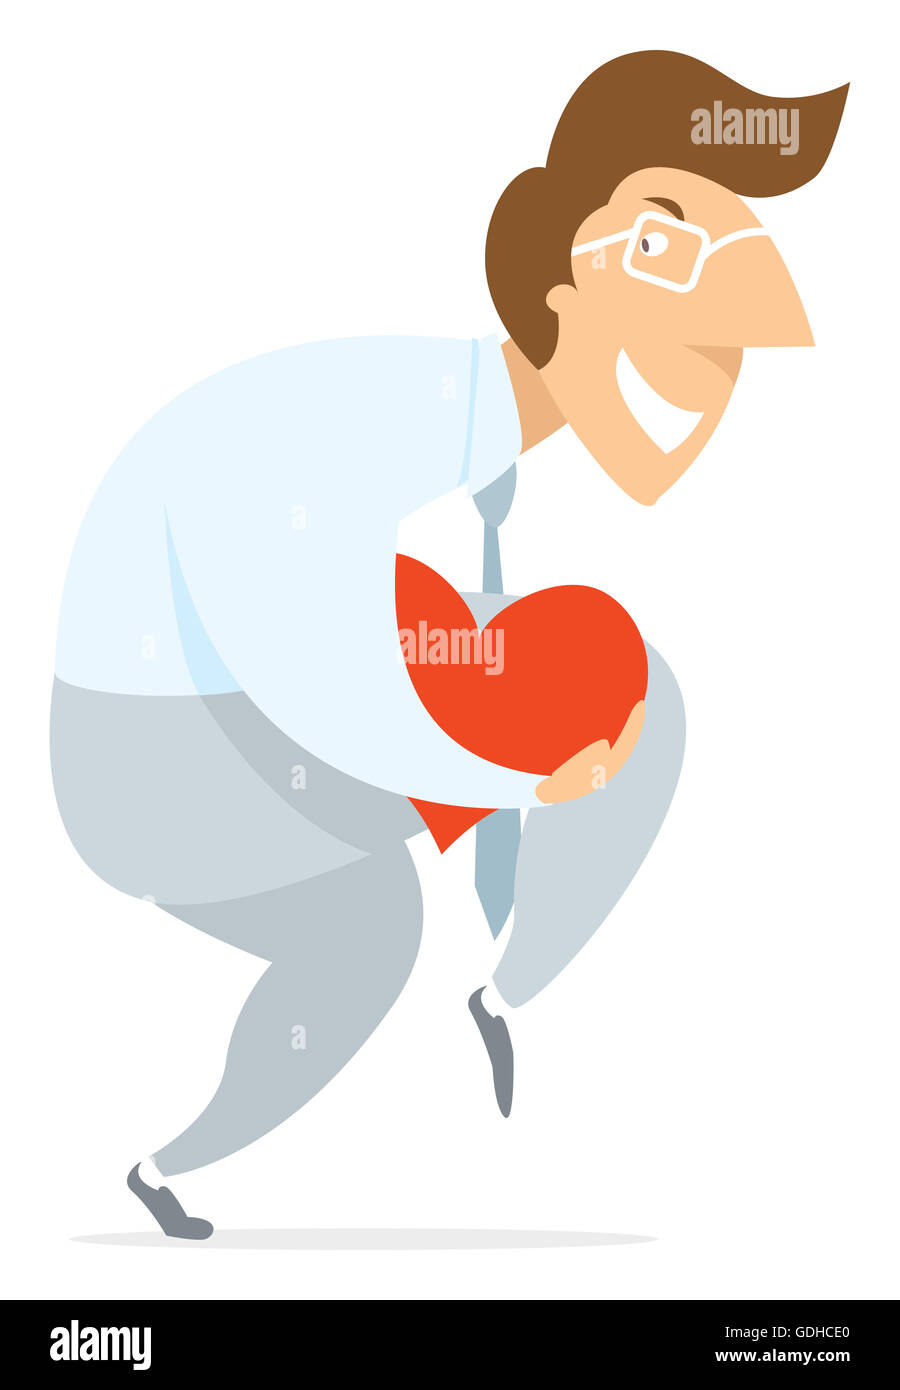 Cartoon illustration of man tip toe walking stealing heart or love Stock Photo